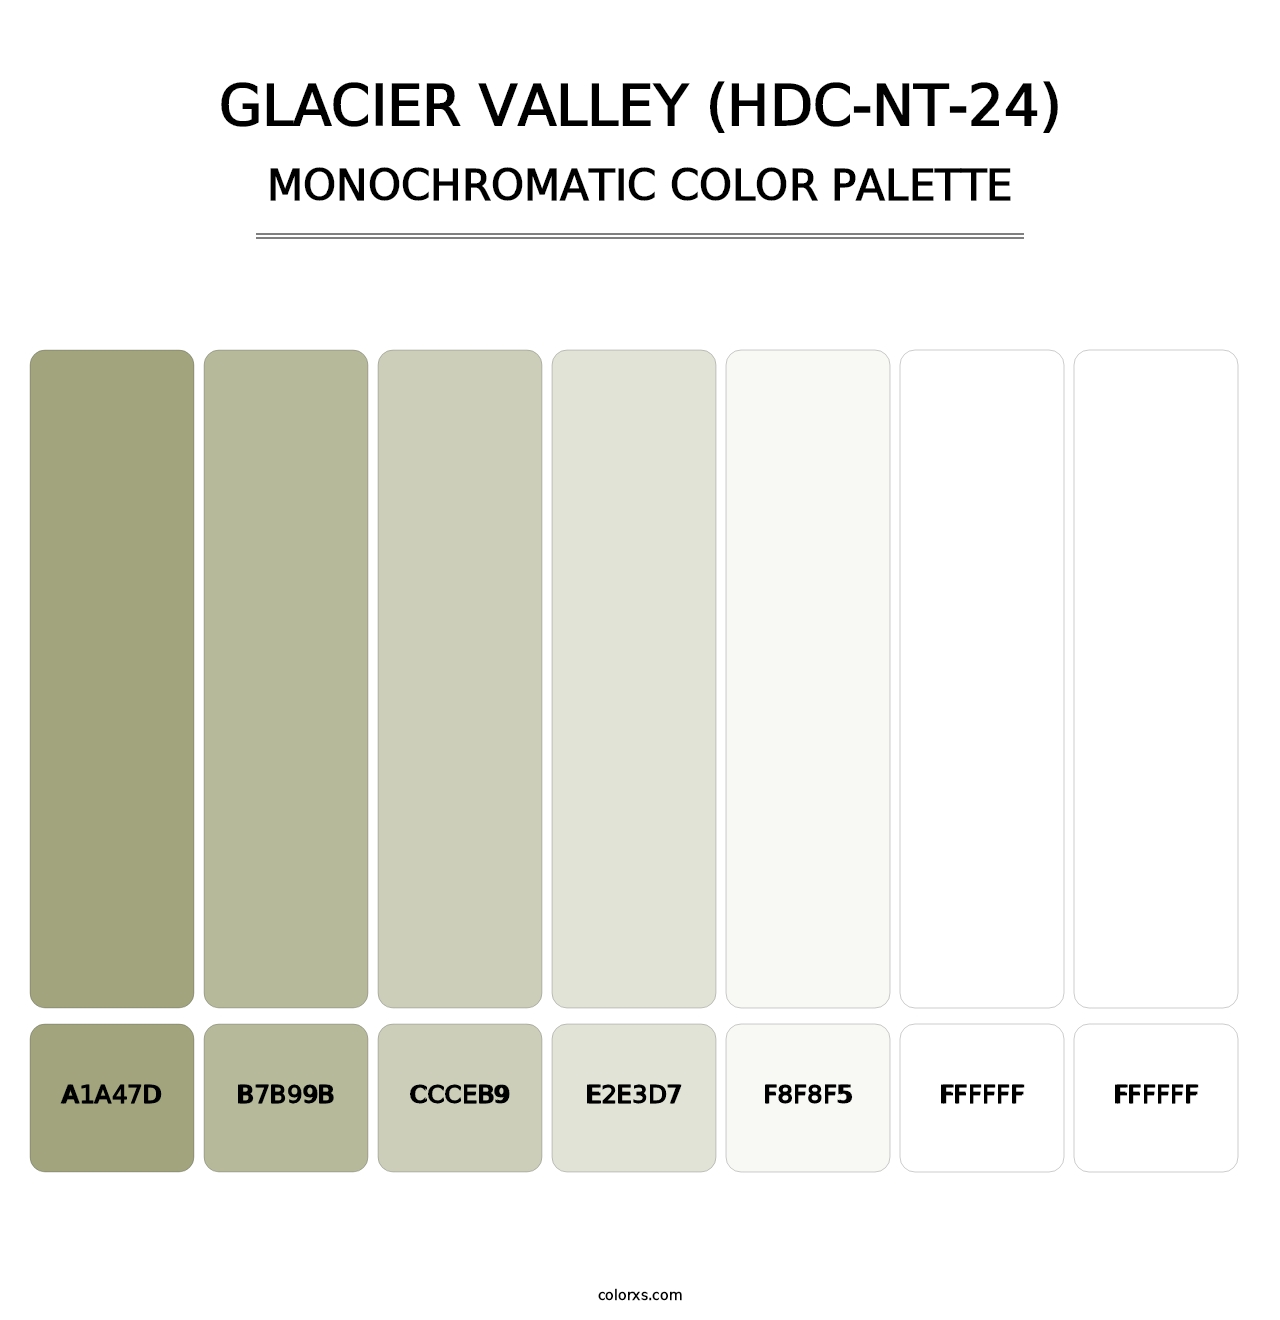 Glacier Valley (HDC-NT-24) - Monochromatic Color Palette